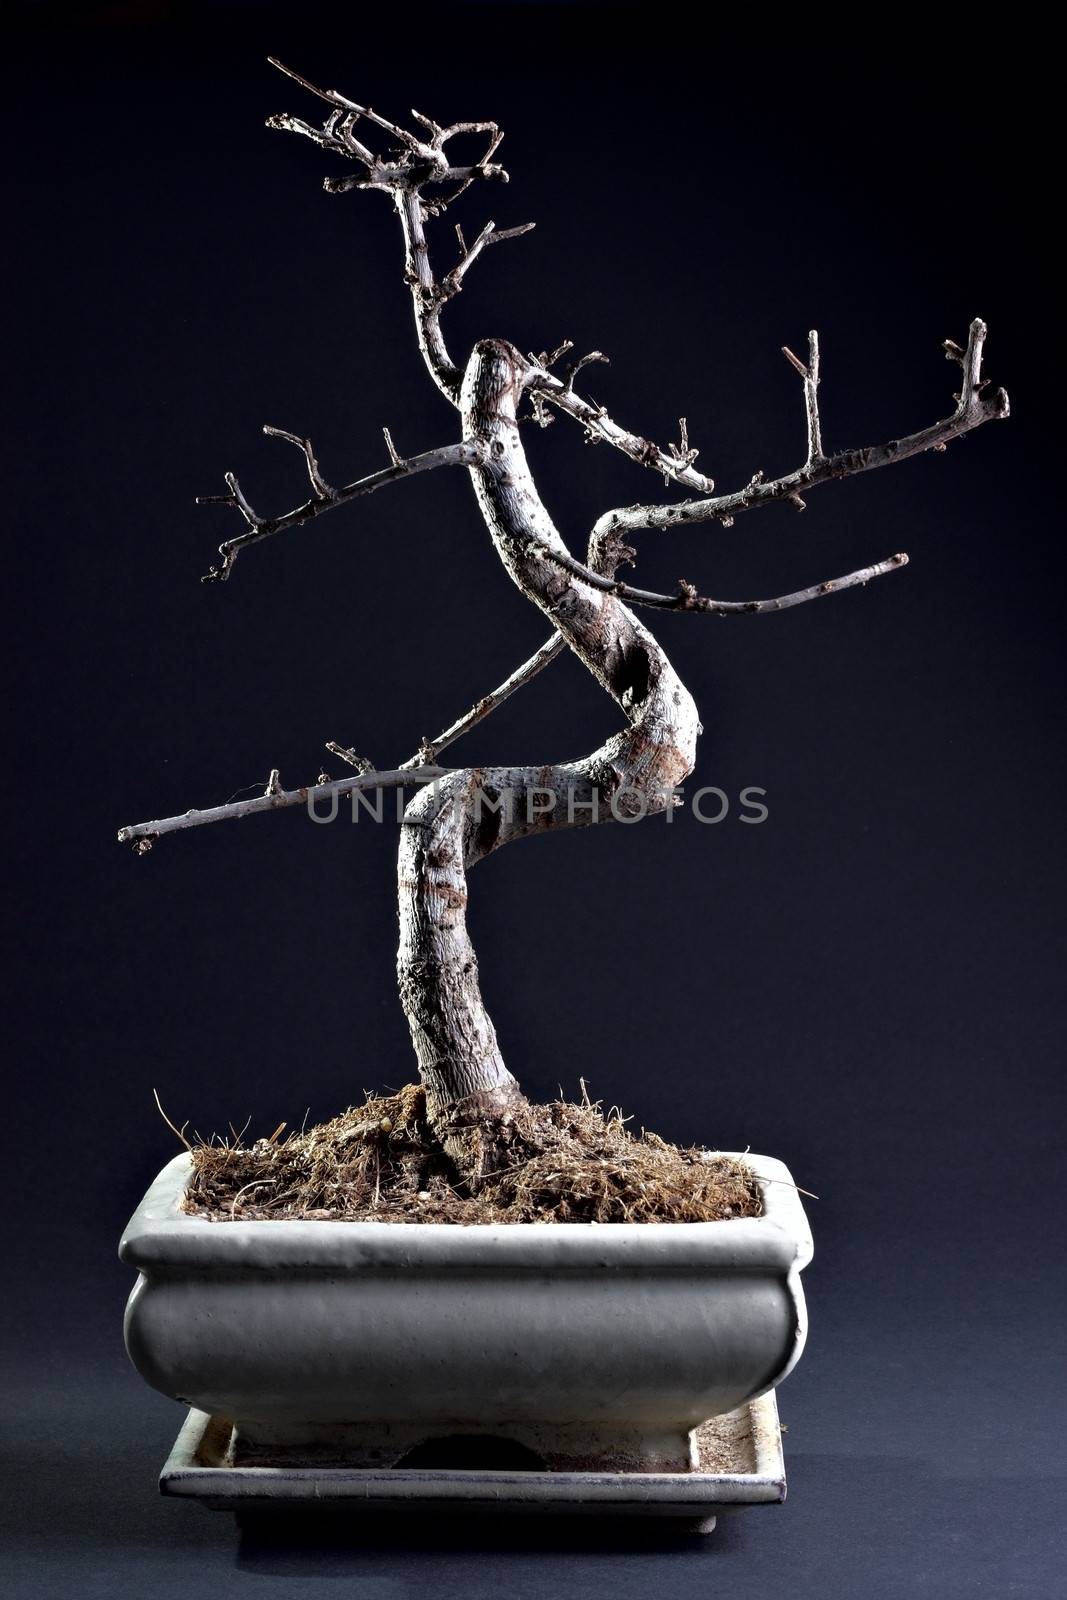 Little bonsai without leaves by dedmorozz